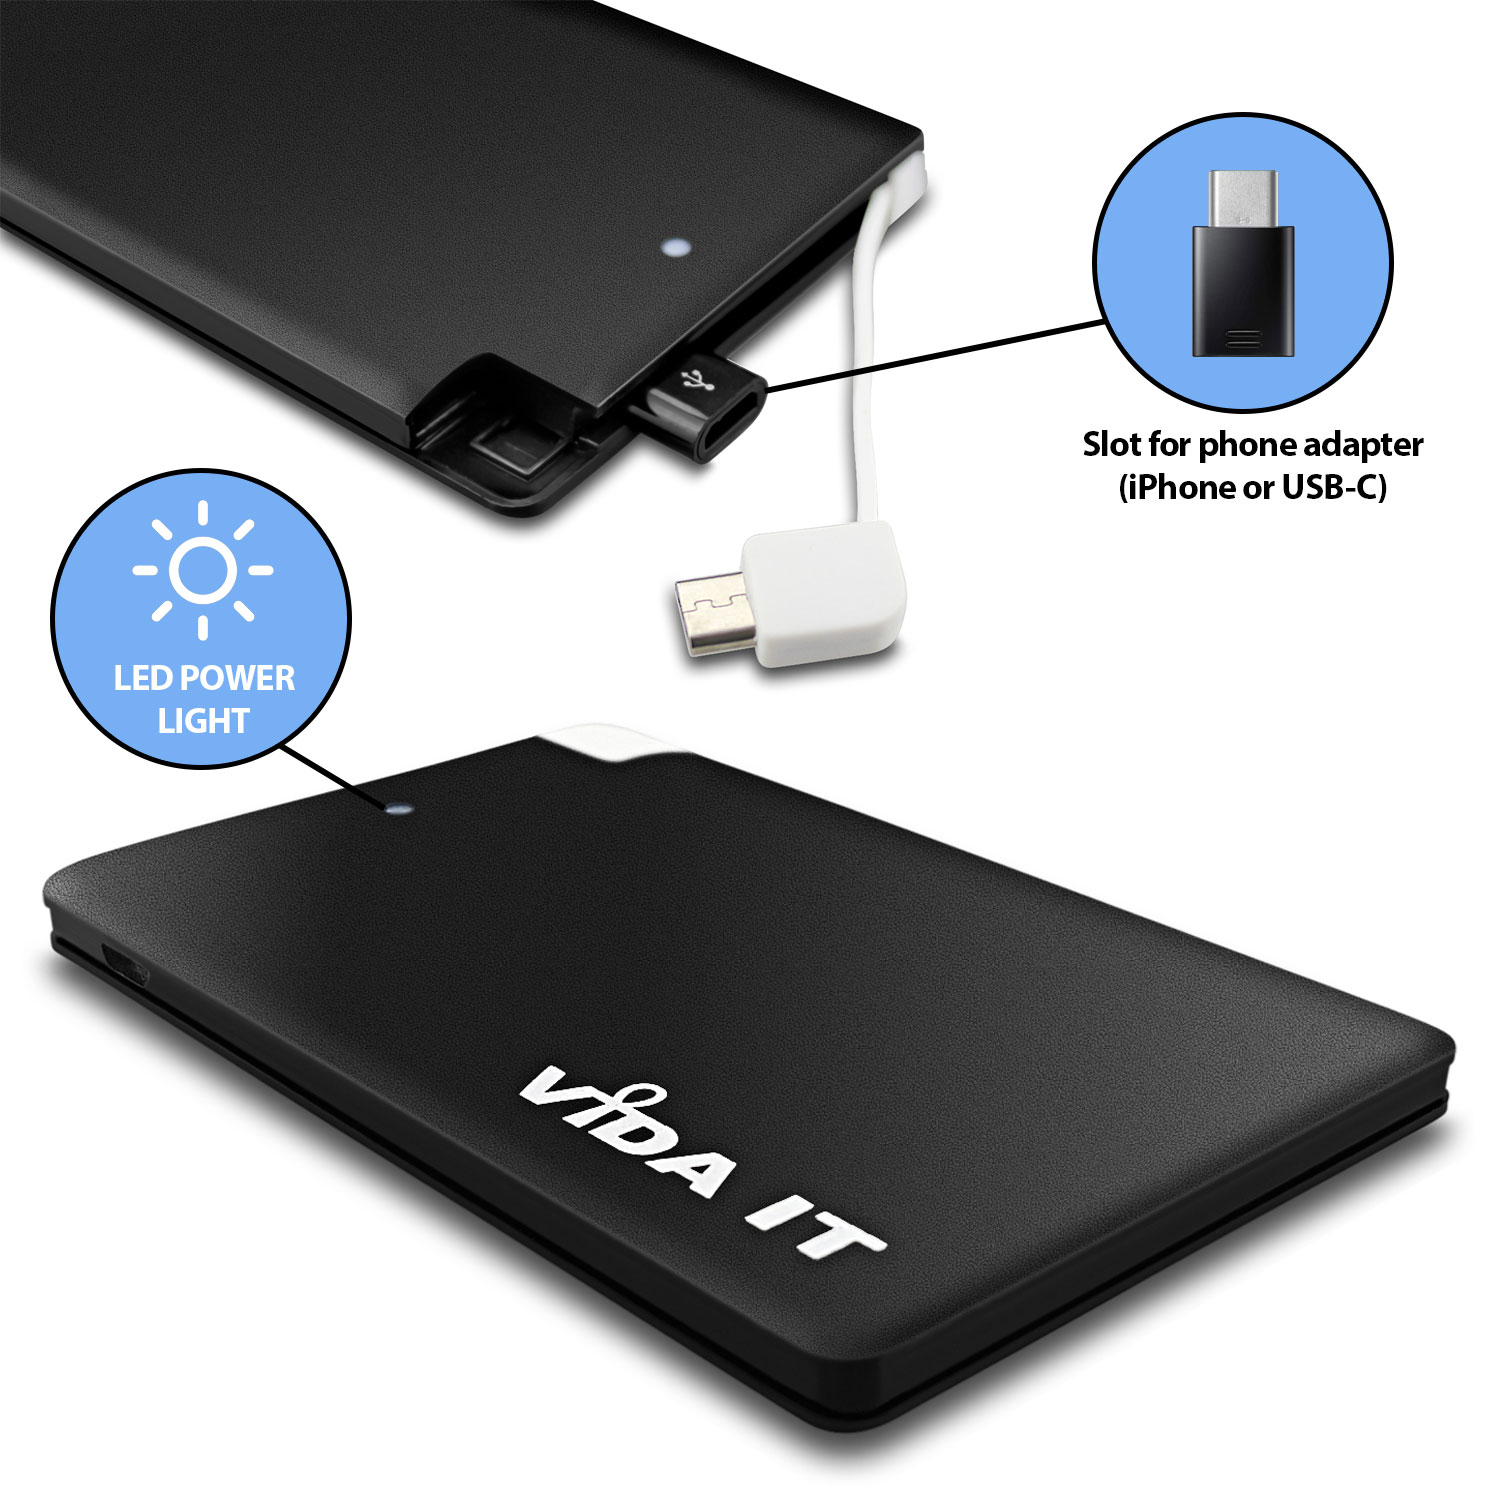 Vida IT vCard Slim Portable Power Bank Sottile Esterno da 2500mAh Carica Batteria Portatile con adattatori iPhone-Lightning e USB Type-C